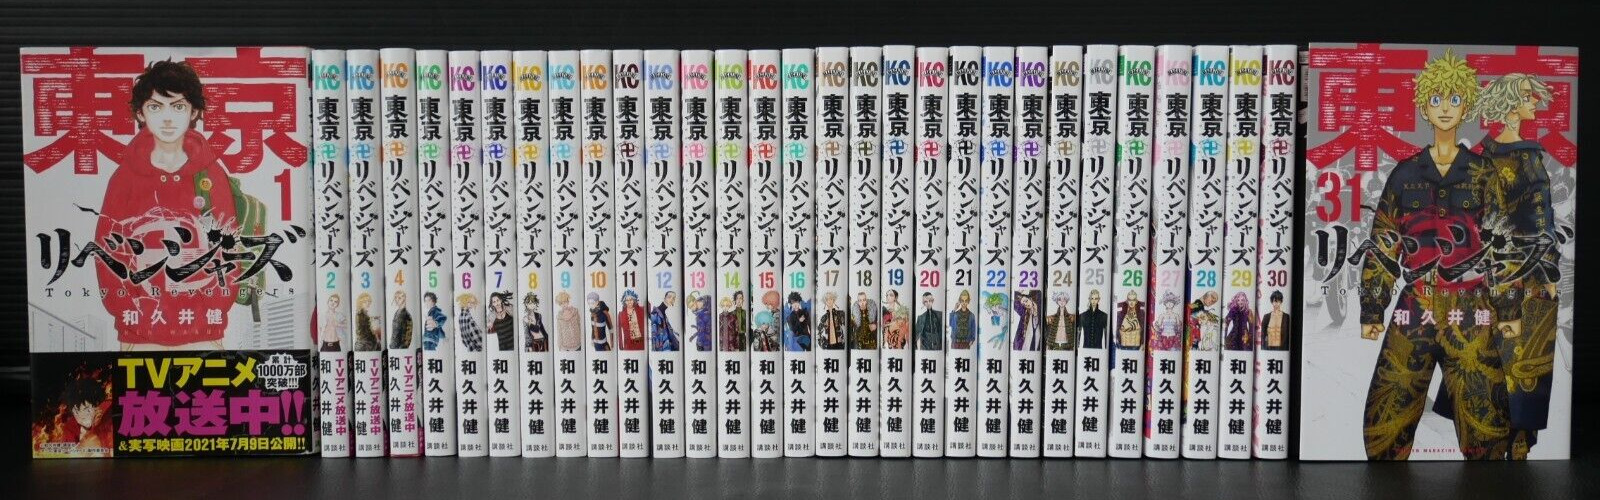 Tokyo Manji Revengers Manga Vol.1-31 Complete Set by Ken Wakui - from JAPAN